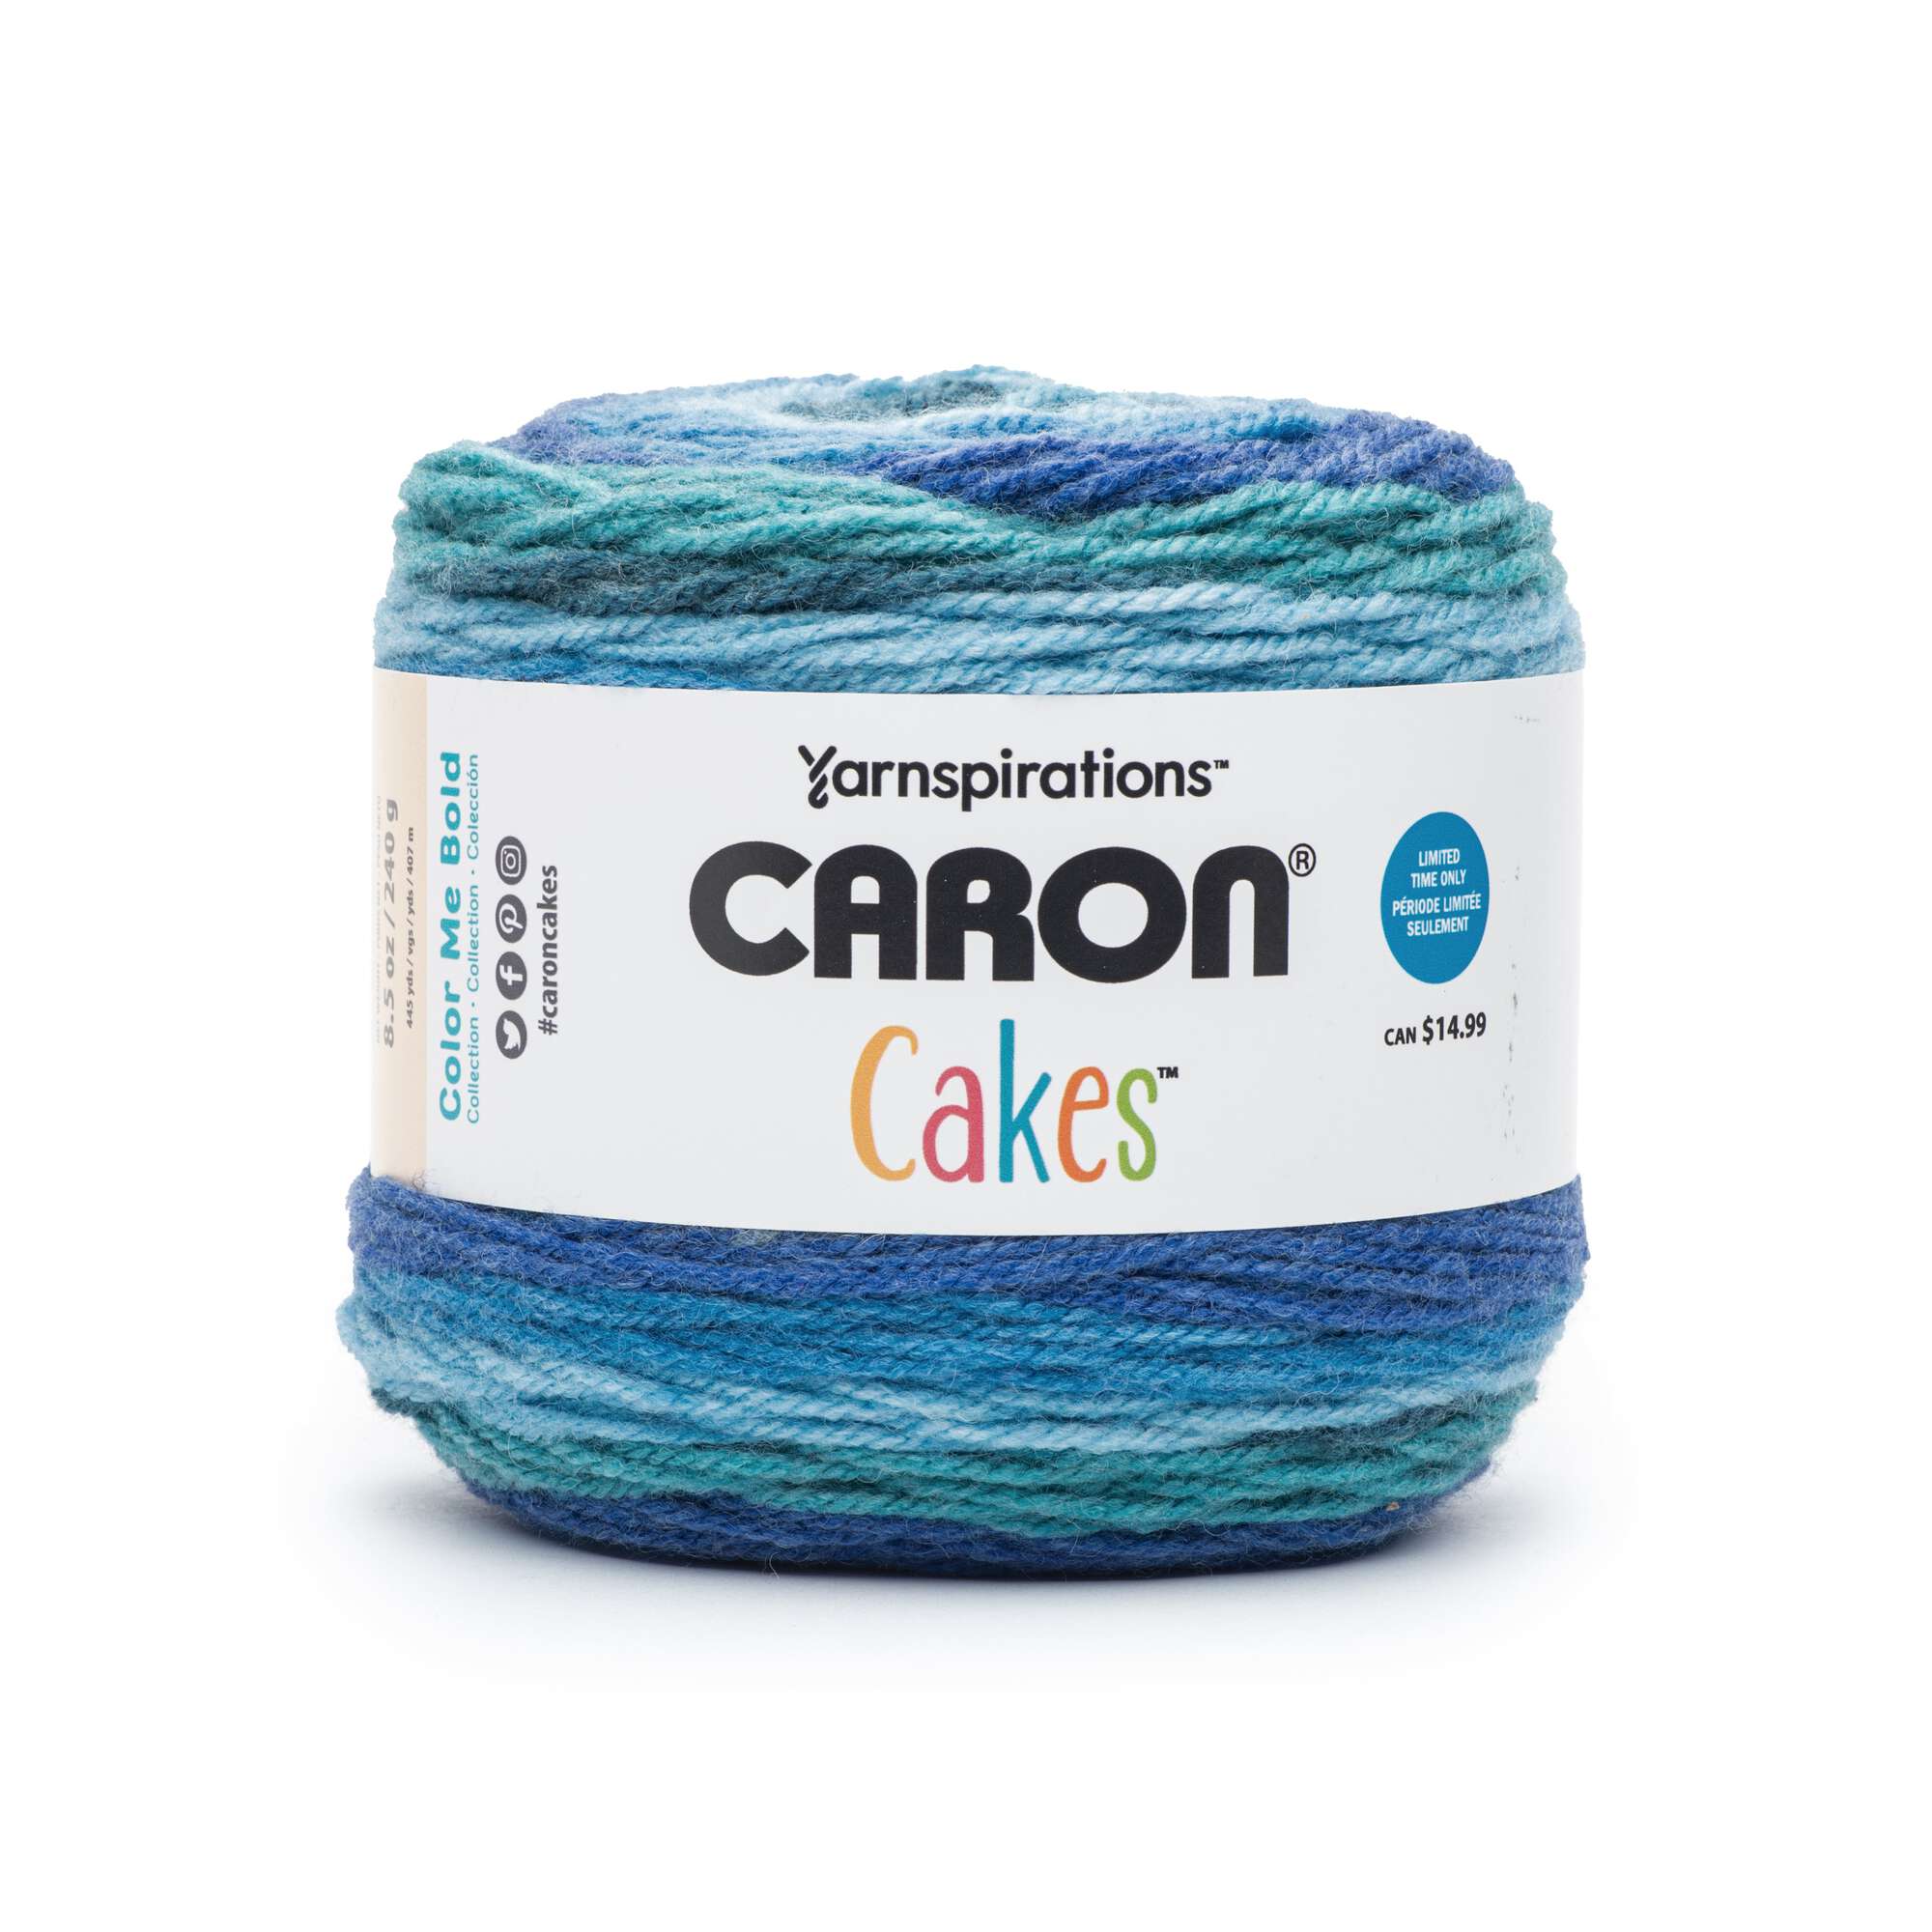 Caron Tea Cakes Yarn | The Crochet Crowd - YouTube